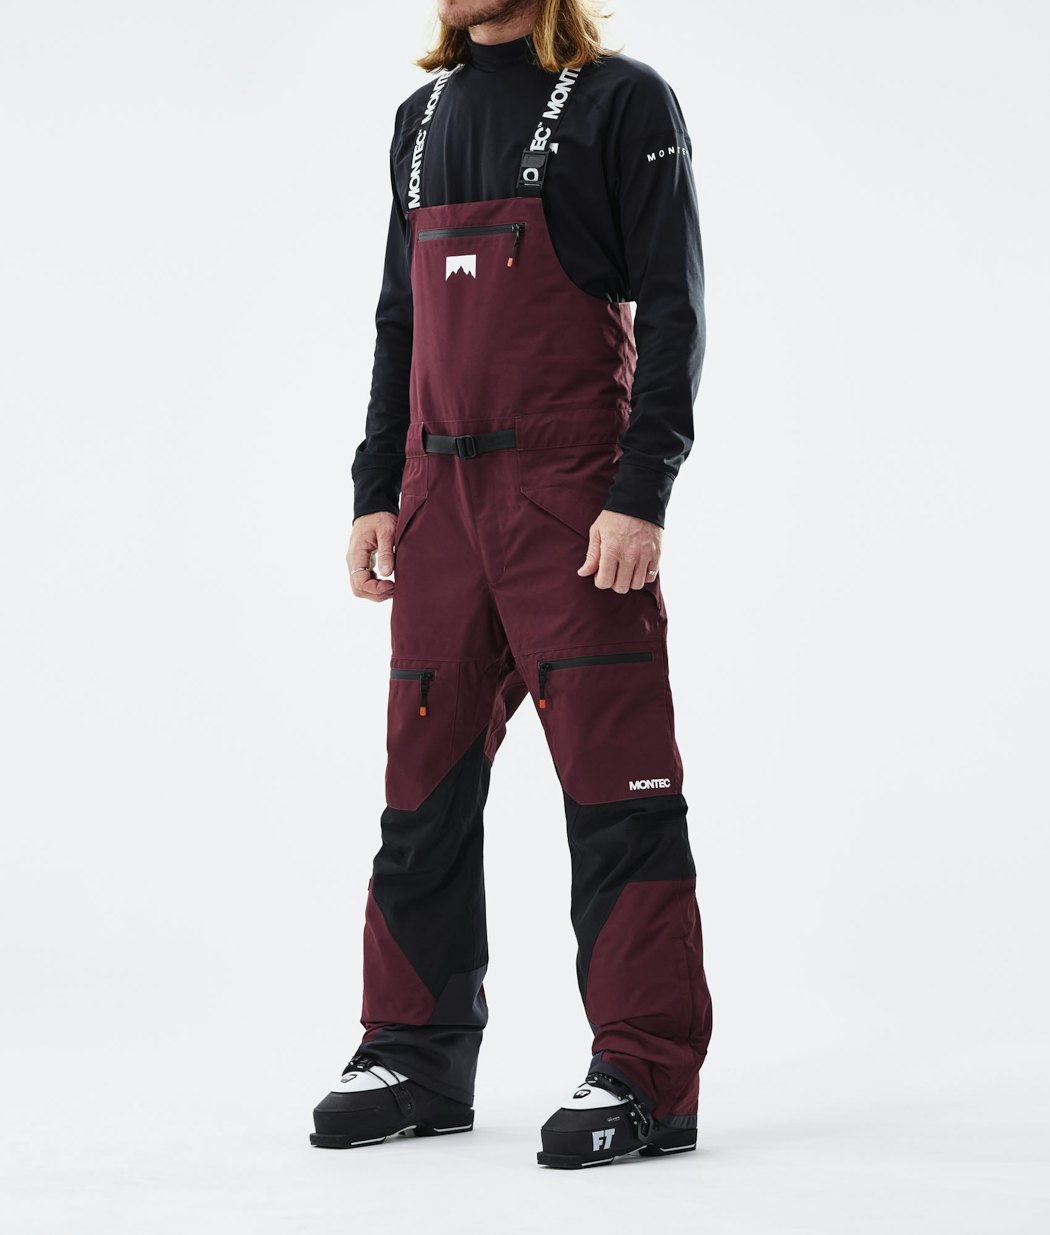 Moss 2021 Ski Pants Men Burgundy/Black